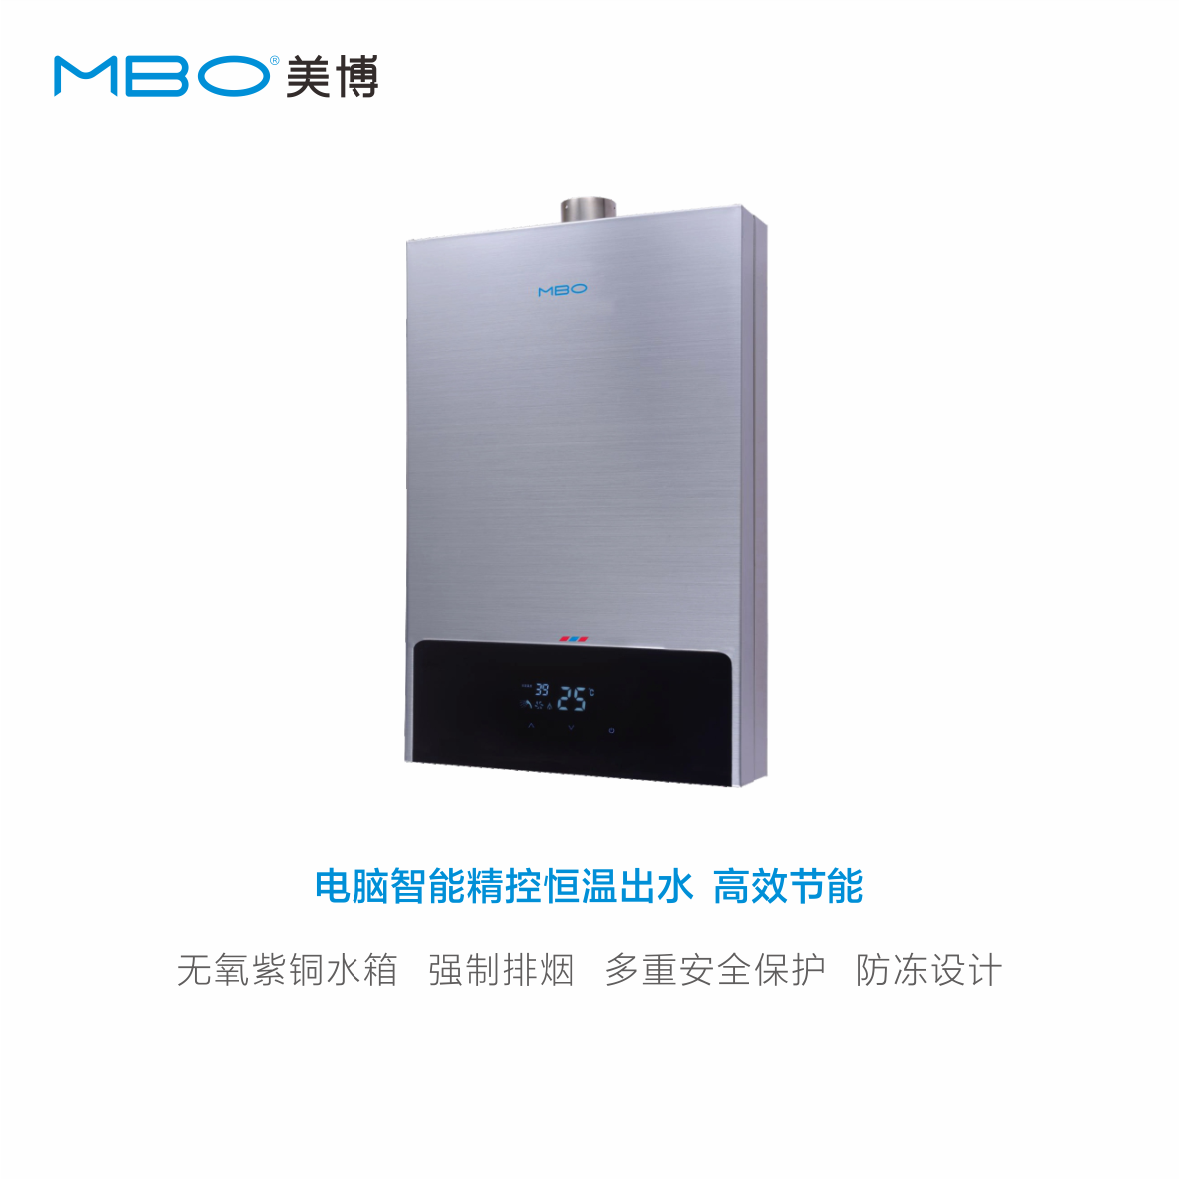 MBO热水器 智能精控恒温系列